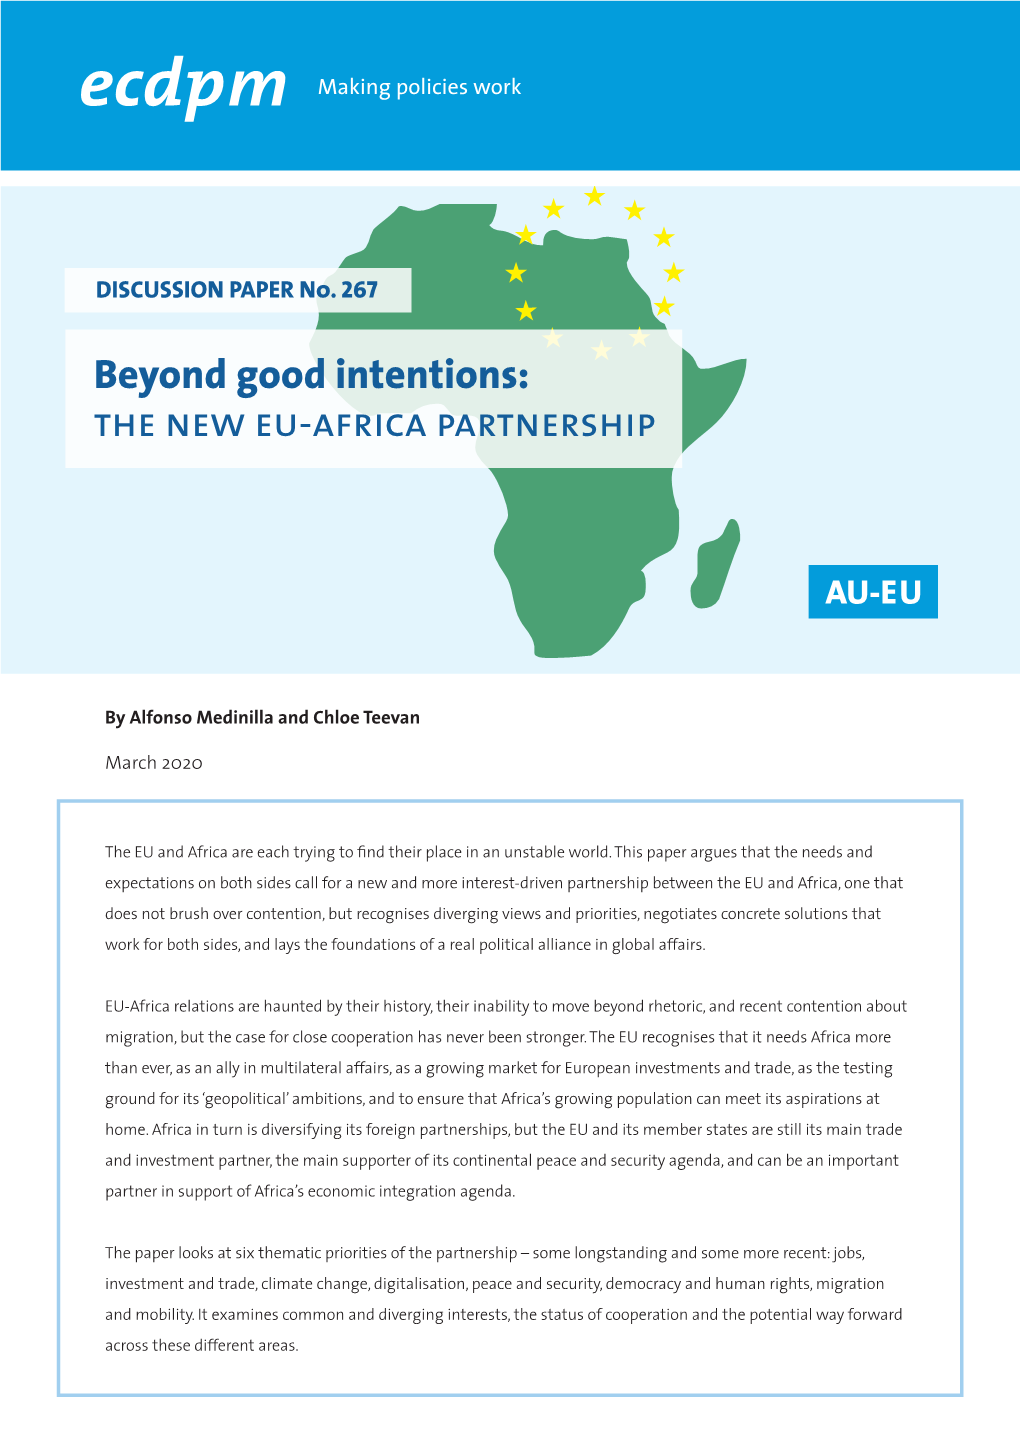 Beyond Good Intentions: the New EU-Africa Partnership (ECDPM